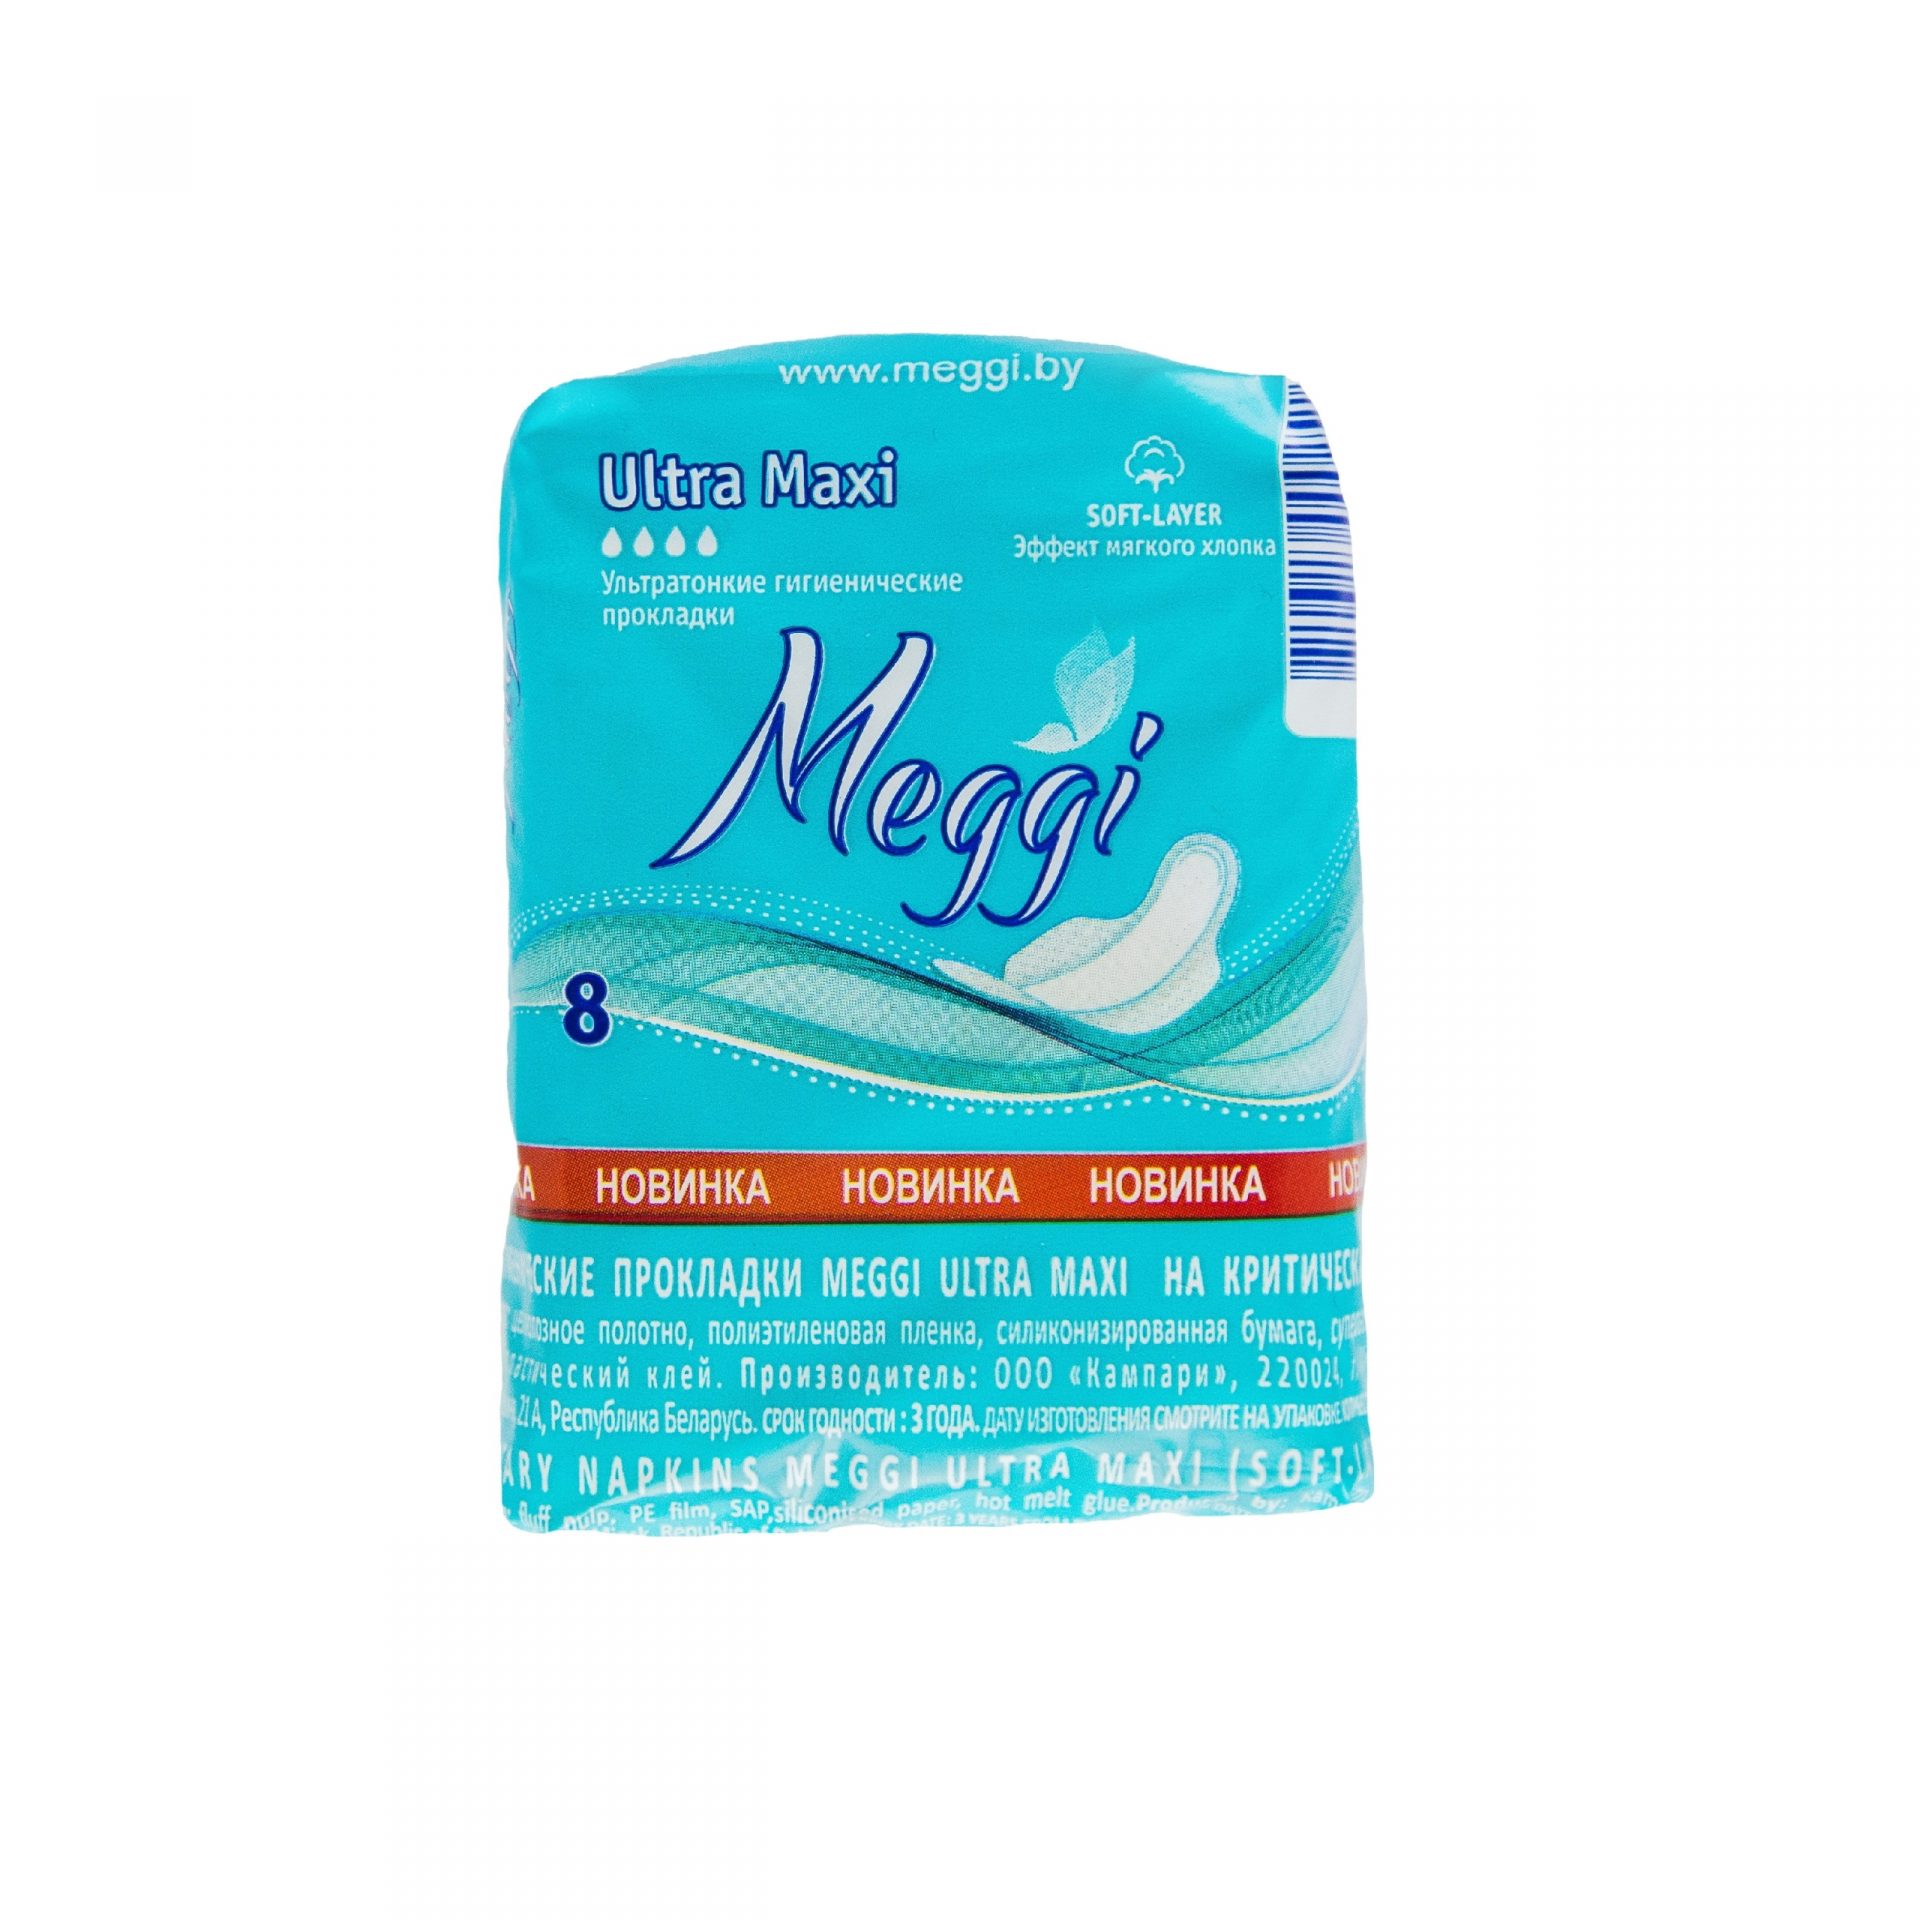 Ультра макси. Прокладки Meggi Ultra Light 10шт. Прокладки Meggi Ultra Maxi. Прокладки Meggi Ultra Maxi 16. Meggi Ultra Maxi + ультратонкие гигиенические ночные прокладки.